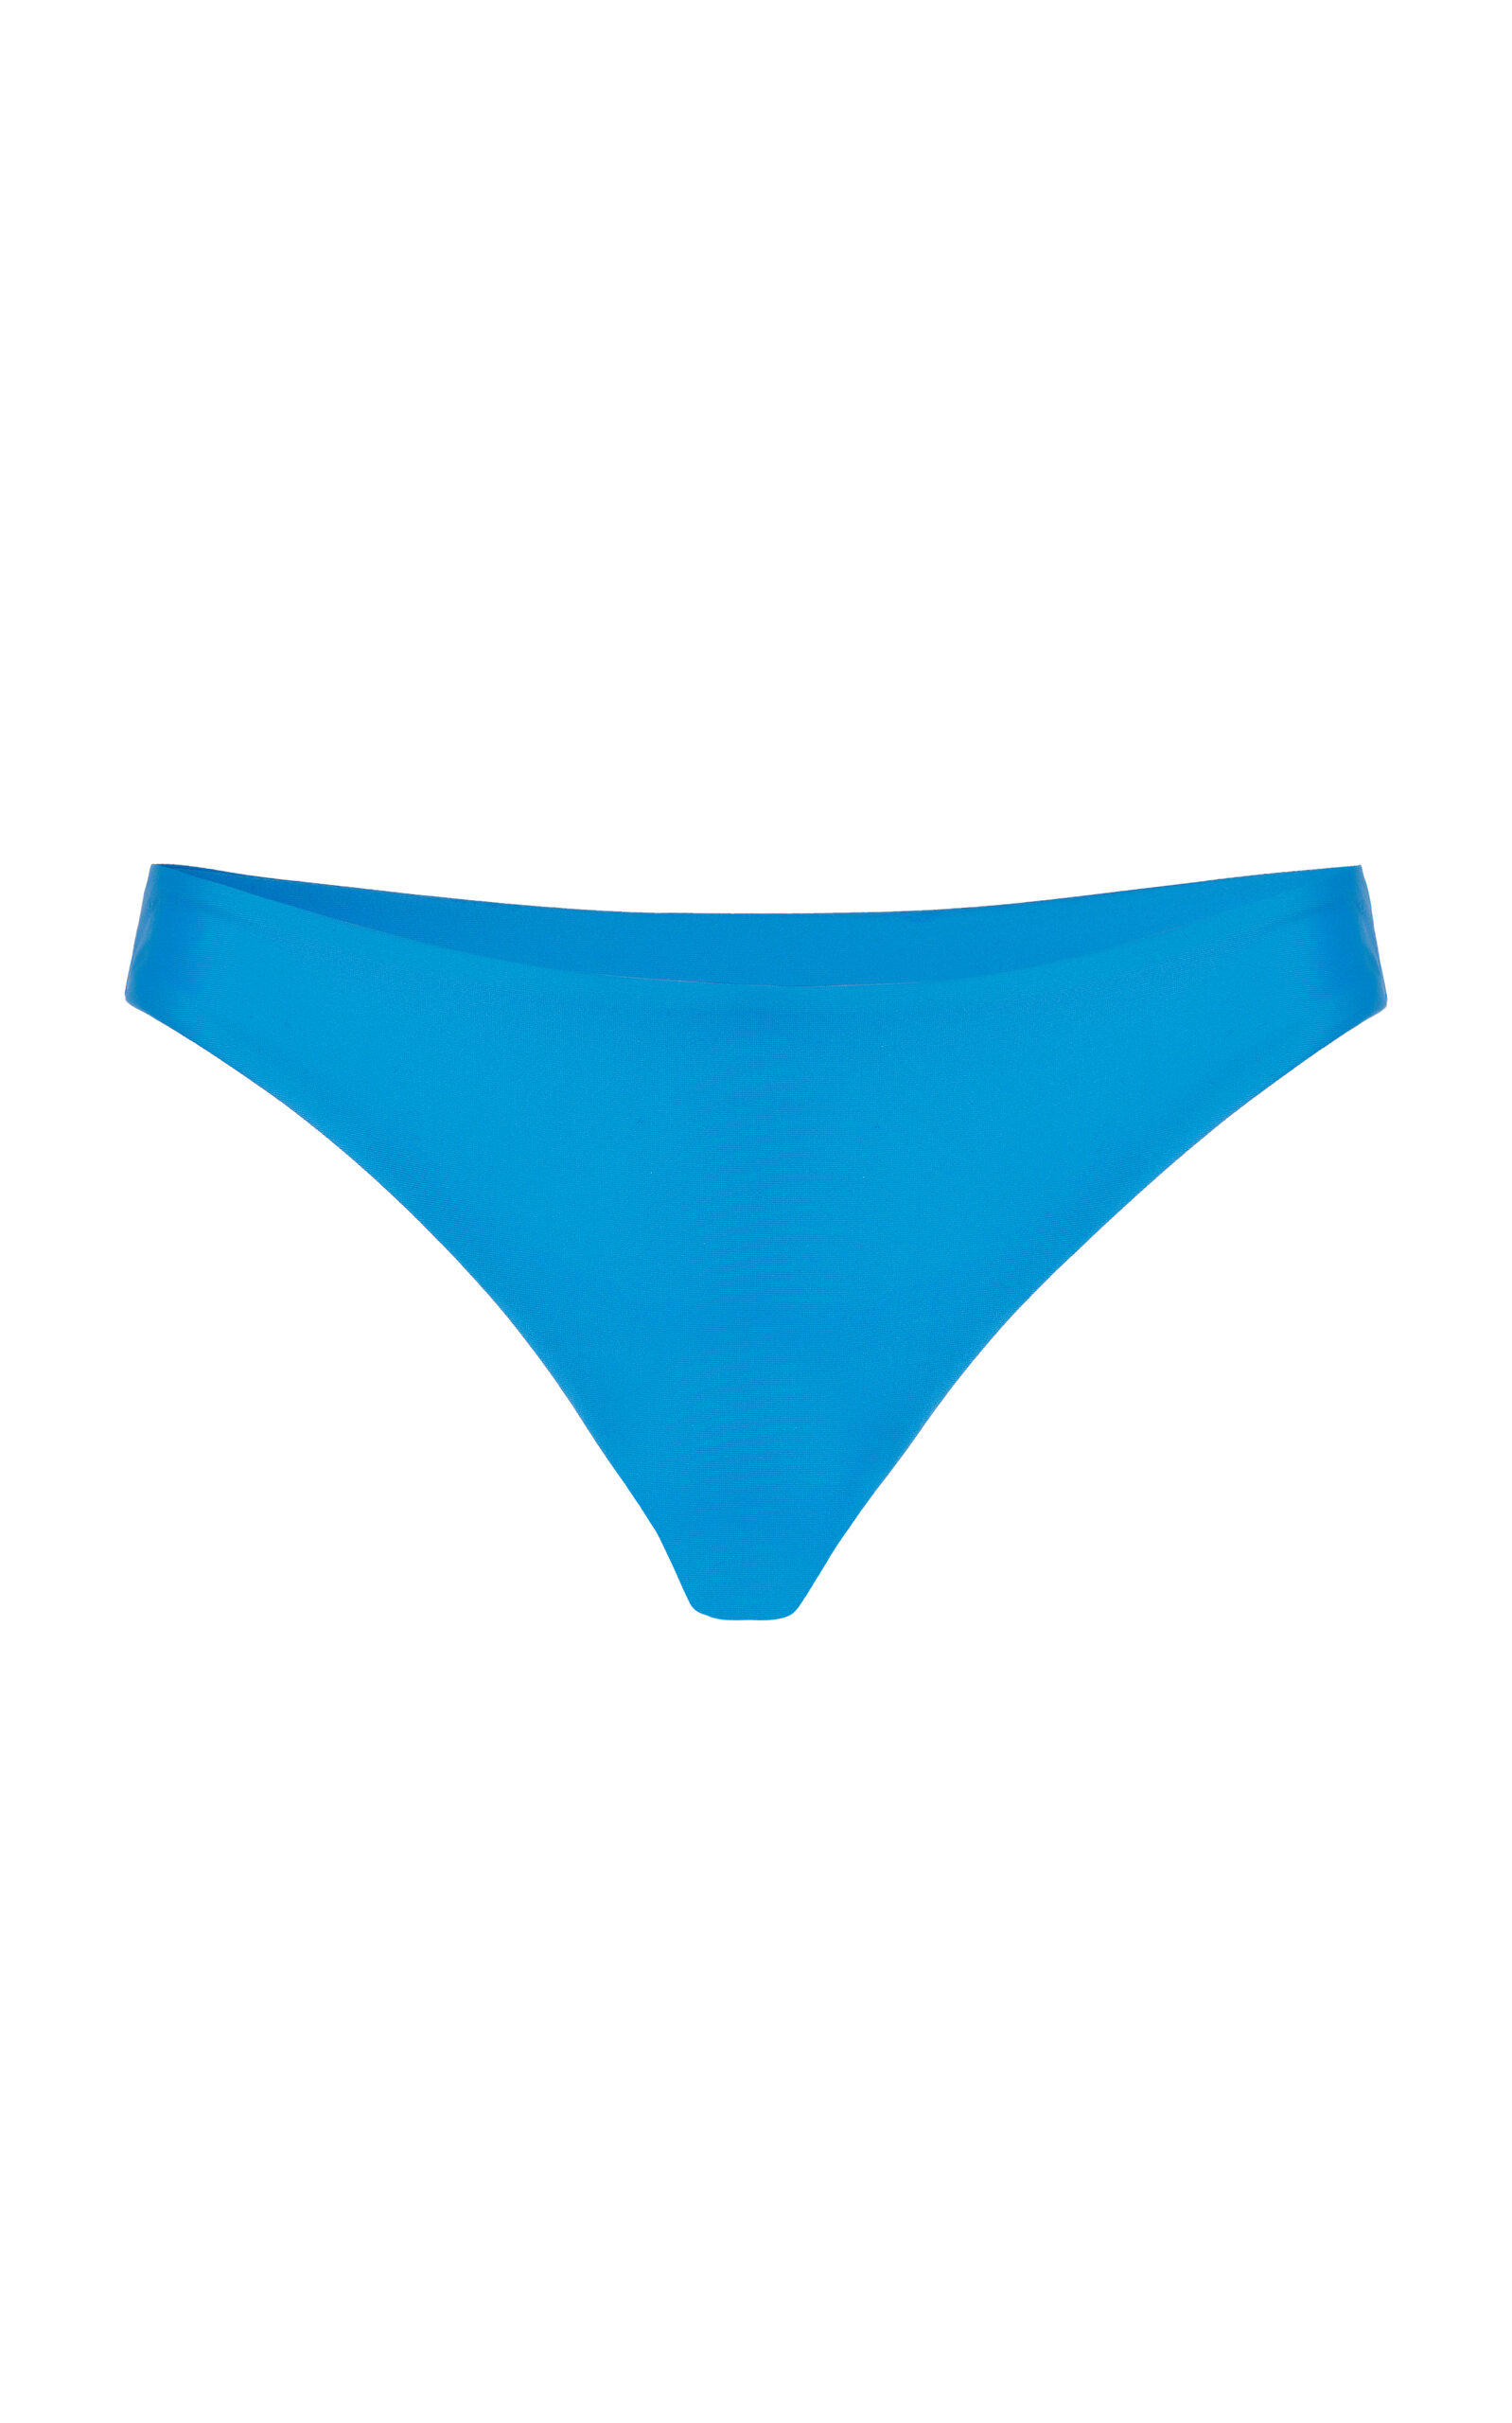 JADE SWIM - Most Wanted Bikini Bottom - Blue - L - Moda Operandi